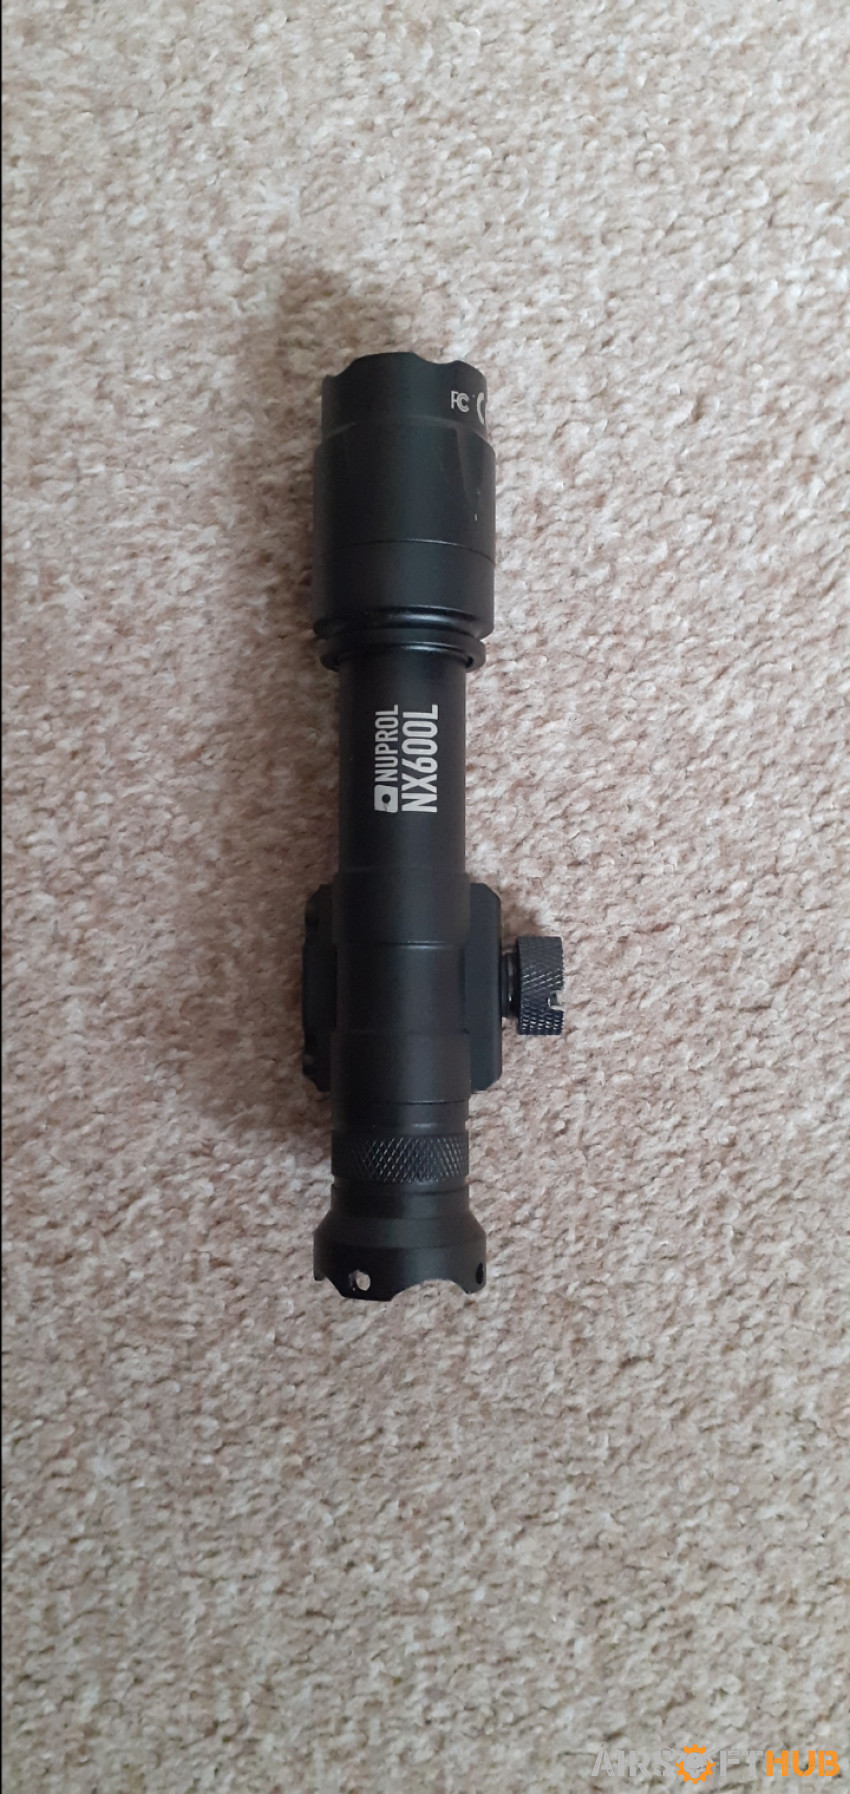 NUPROL NX600L Flashlight - Used airsoft equipment